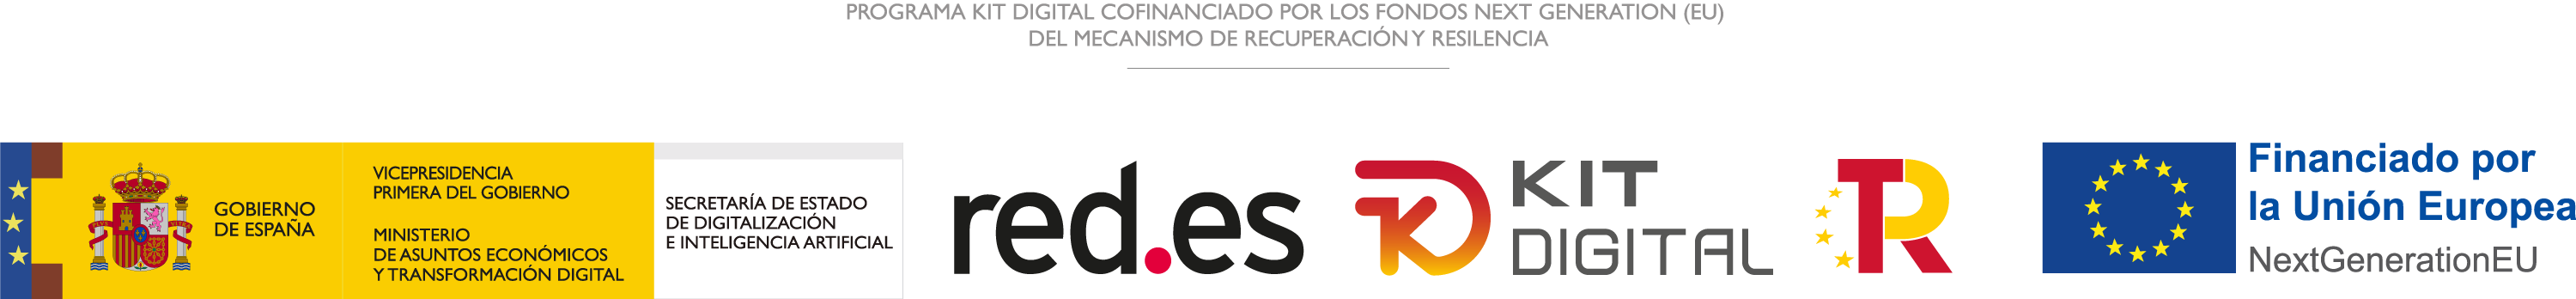 logo kit digital Red es